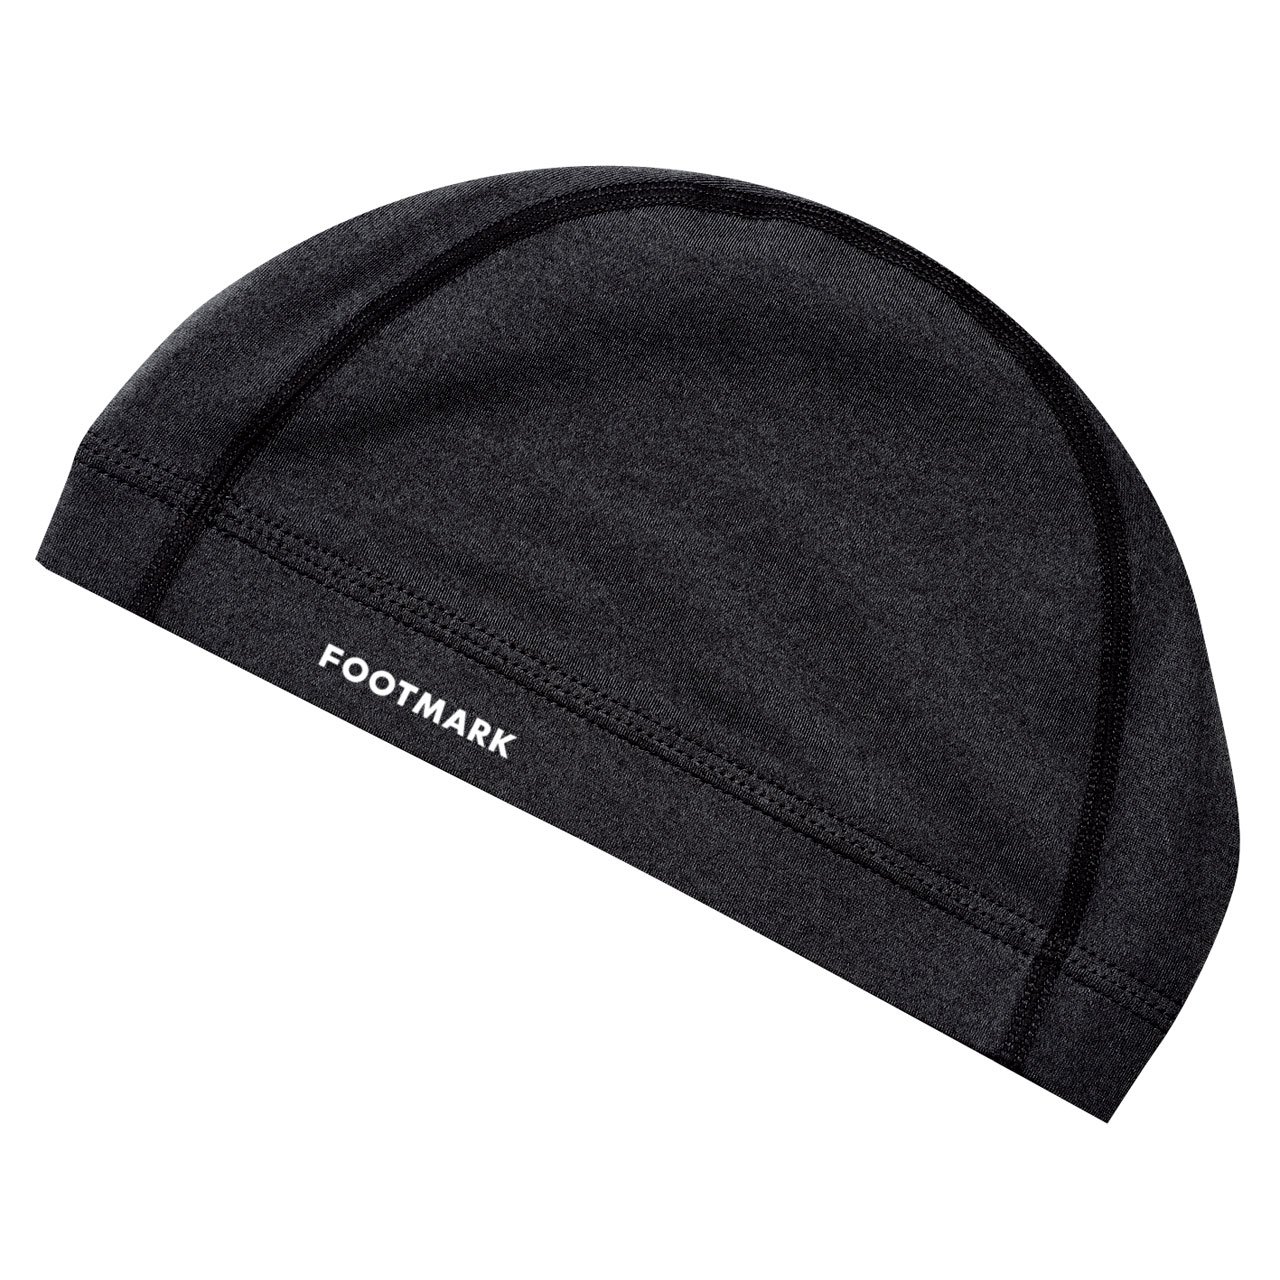 FOOTMARK(フットマーク) 水泳帽 スイミングキャップ 新ツーウェイキャップ 230178 ブラック(09)